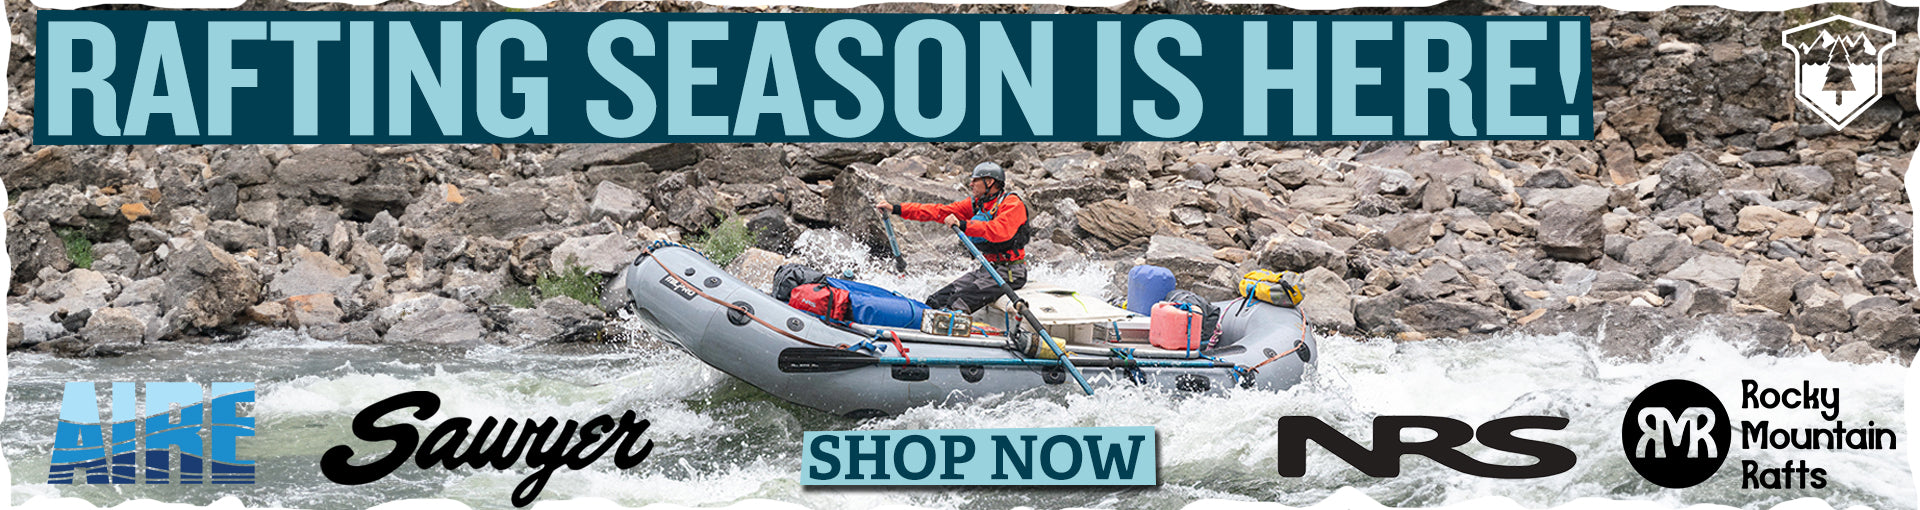 rafting season web banner